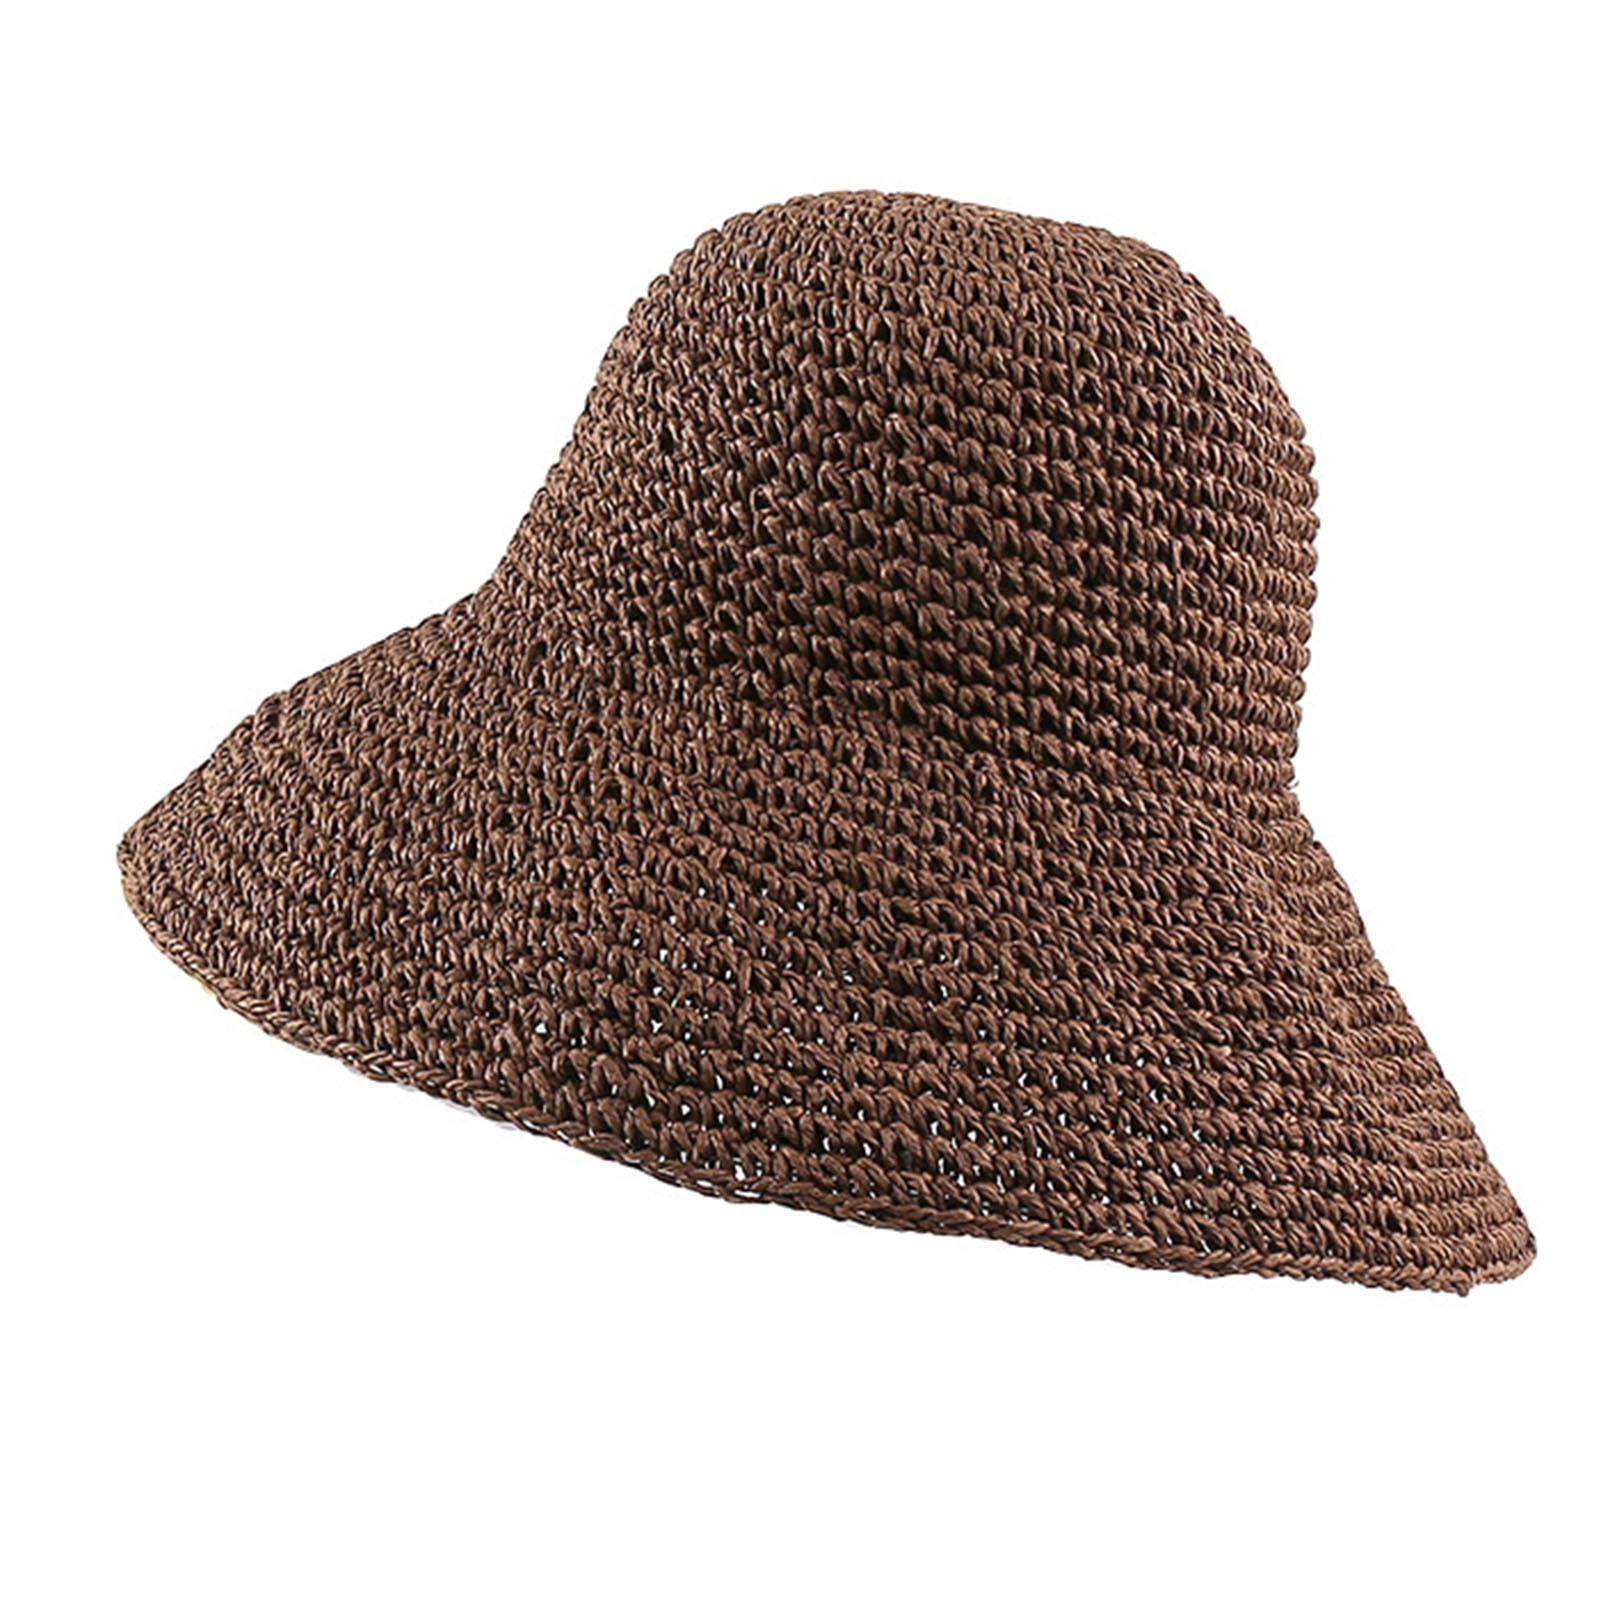 Brown Corduroy Bucket Hat, Wide Brim Hat for Women, Boho Accessory,  Foldable Sun Hat, Cotton Summer Hat, Beach Gift for Her, Dark Brown Hat 